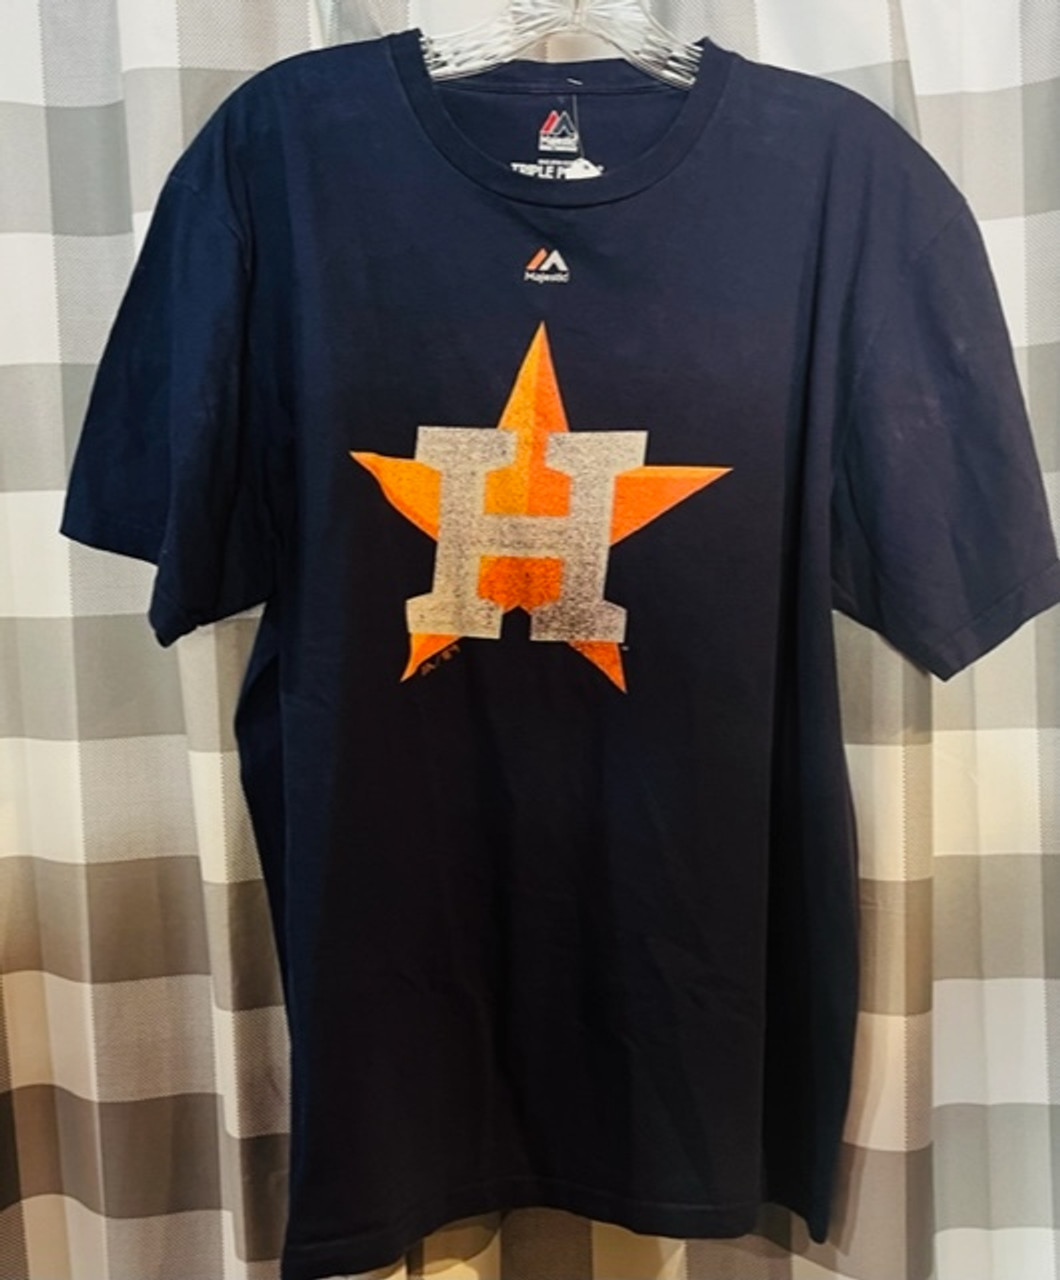 Astros Shirt Astros Vintage Shirt Houston Astros Baseball Shirt